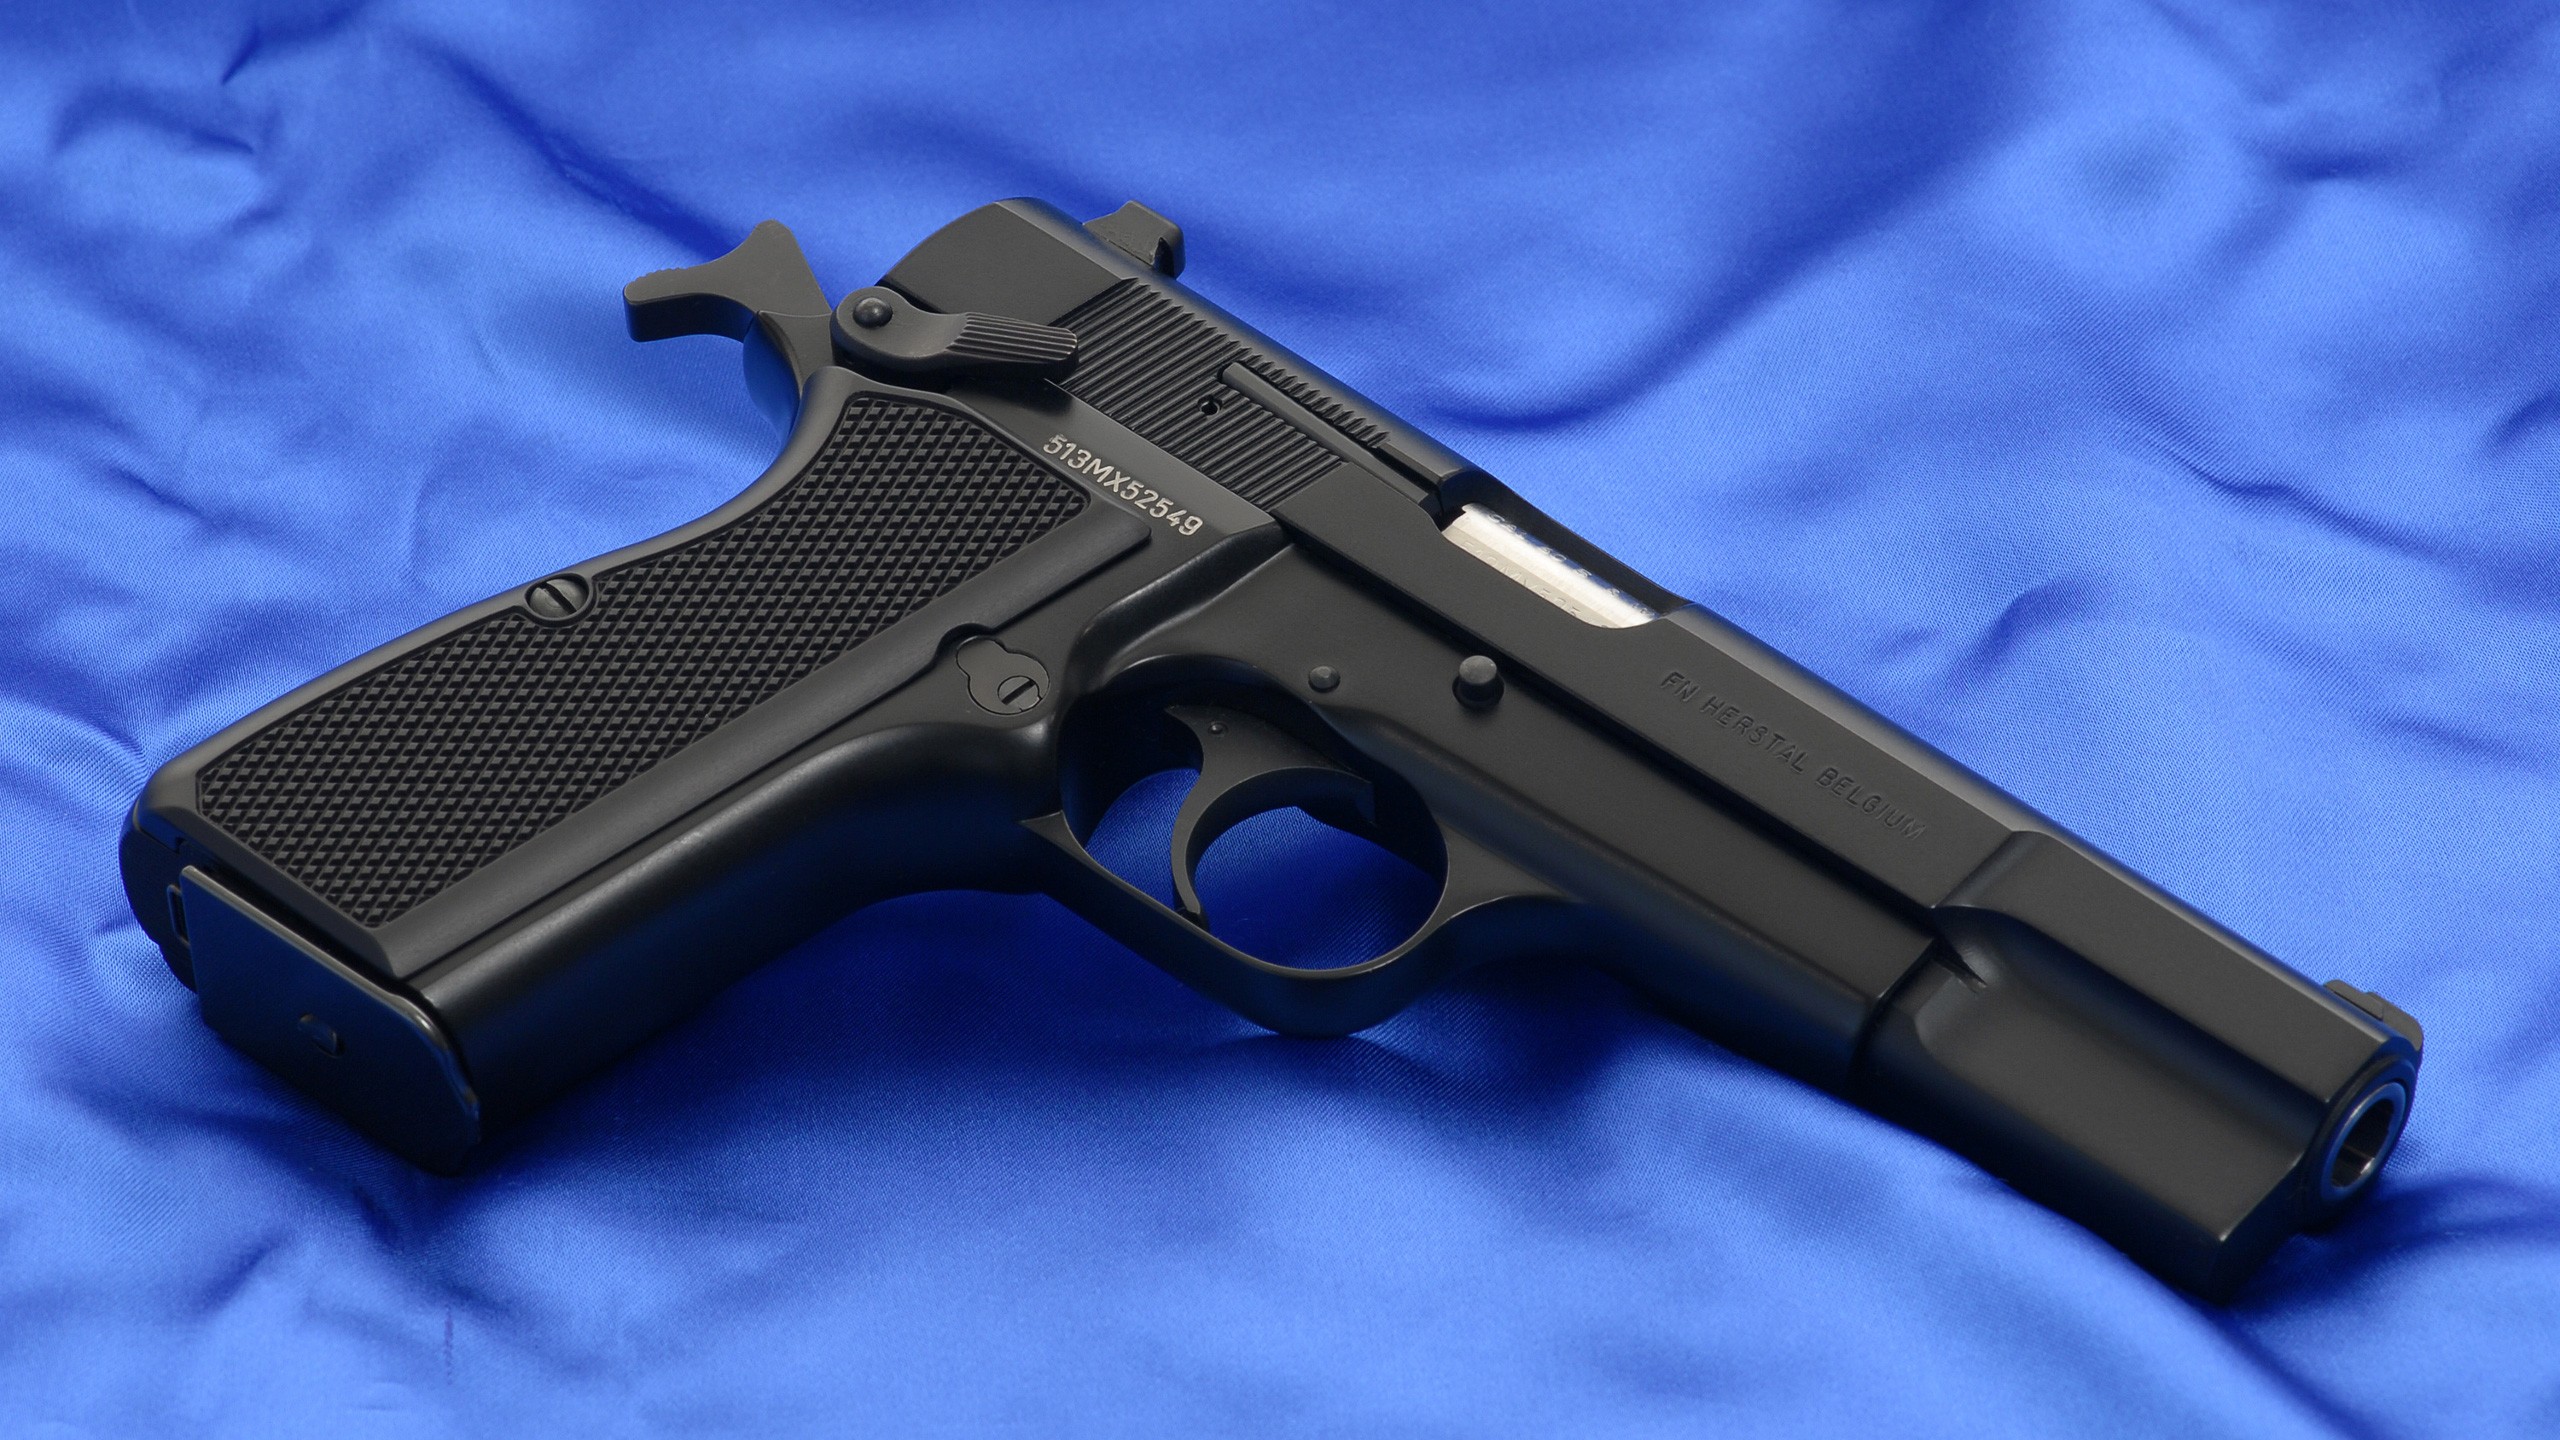 General 2560x1440 gun pistol weapon numbers FN Herstal Browning Hi-Power 9 mm blue background cloth blue black guns Belgian firearms